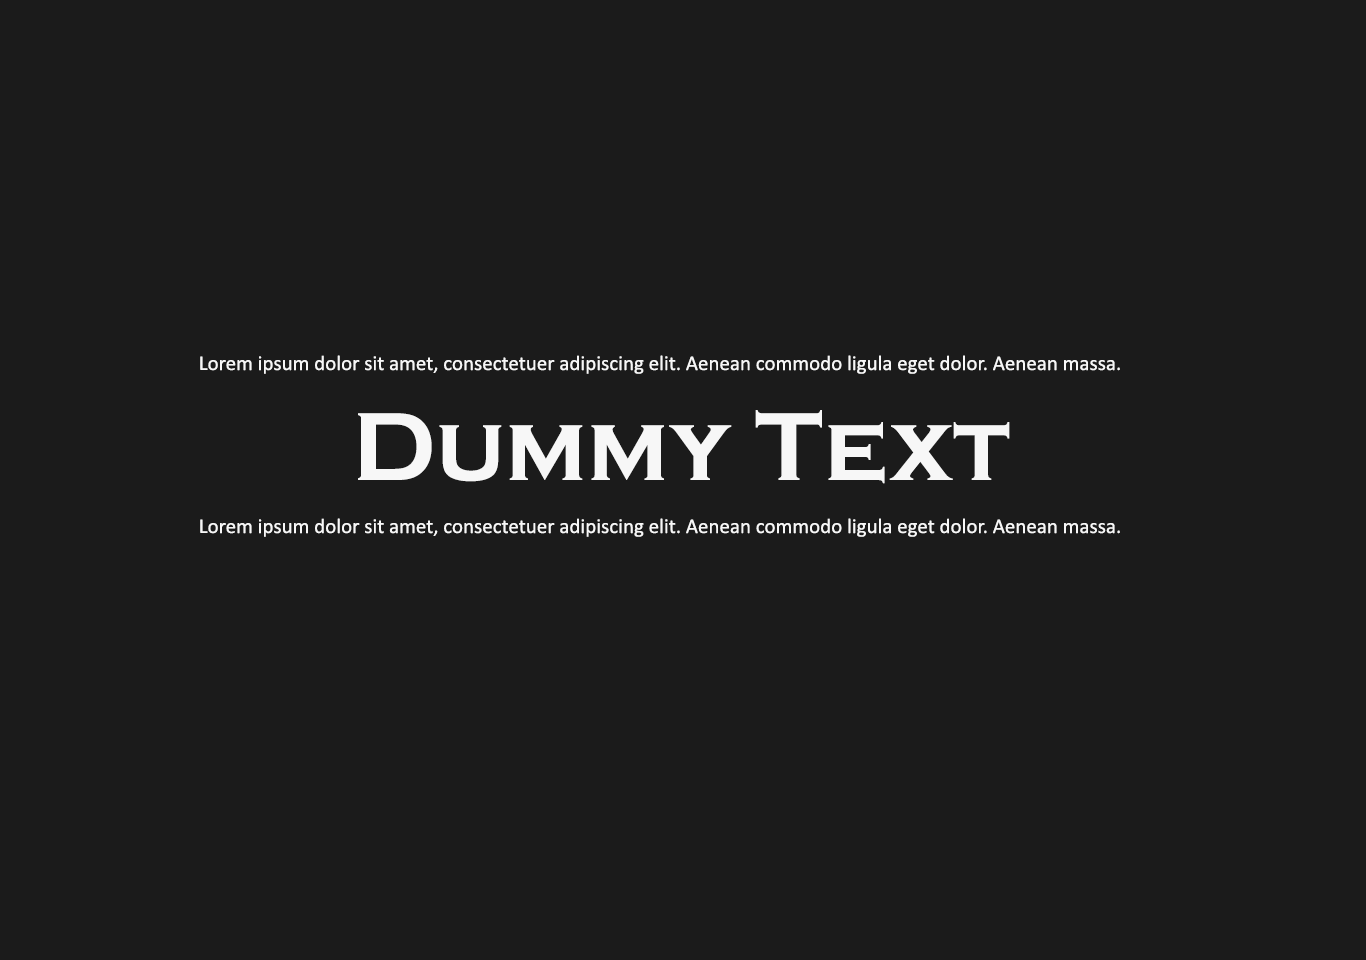 Dummy text